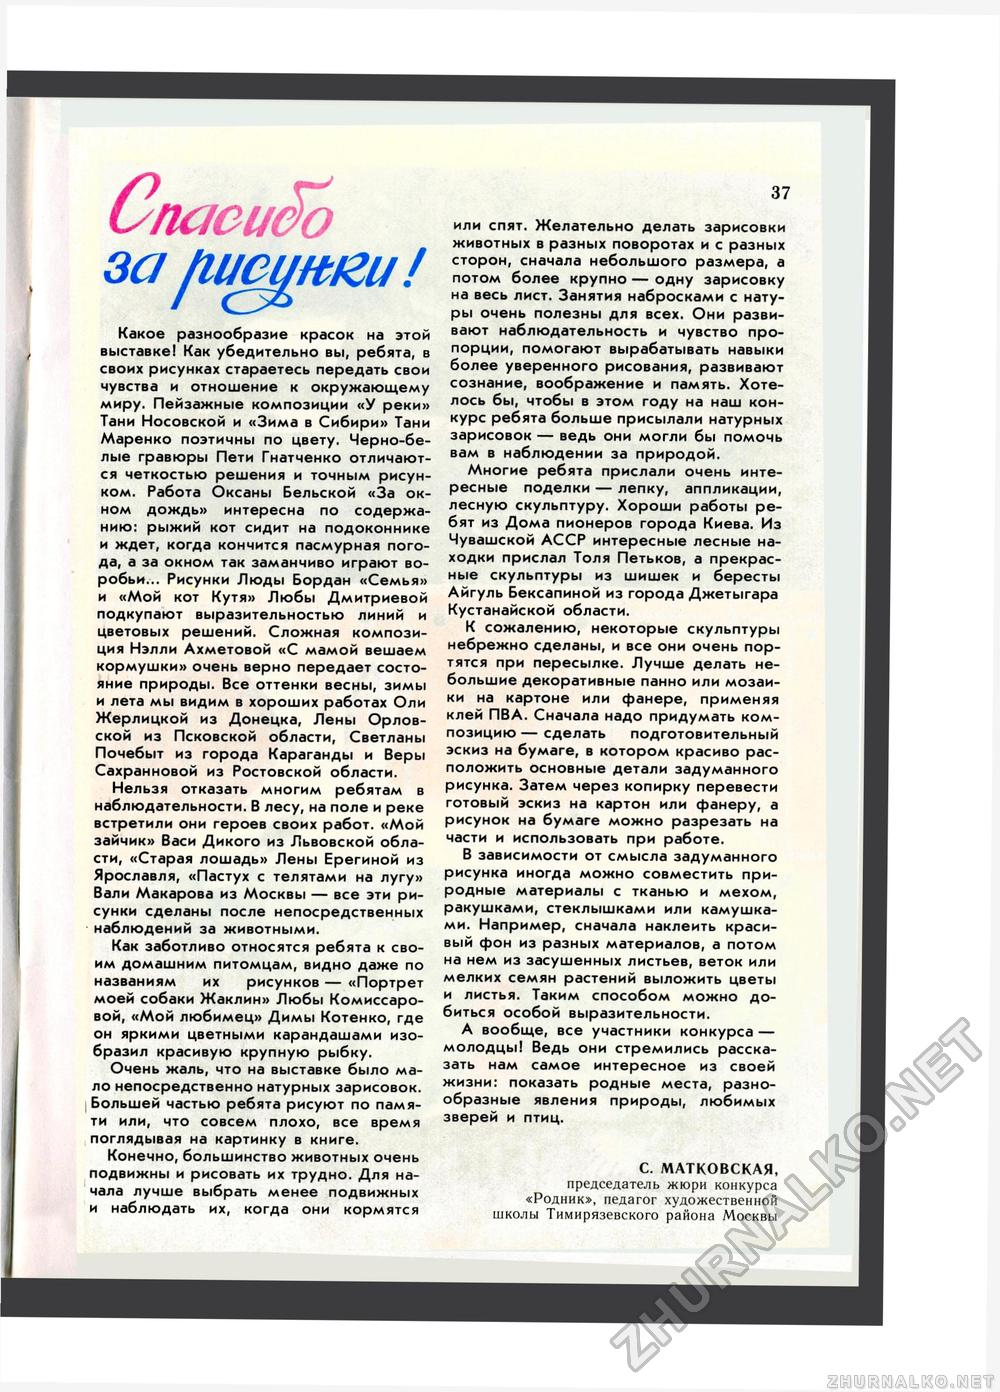 Юный Натуралист 1987-01, страница 39